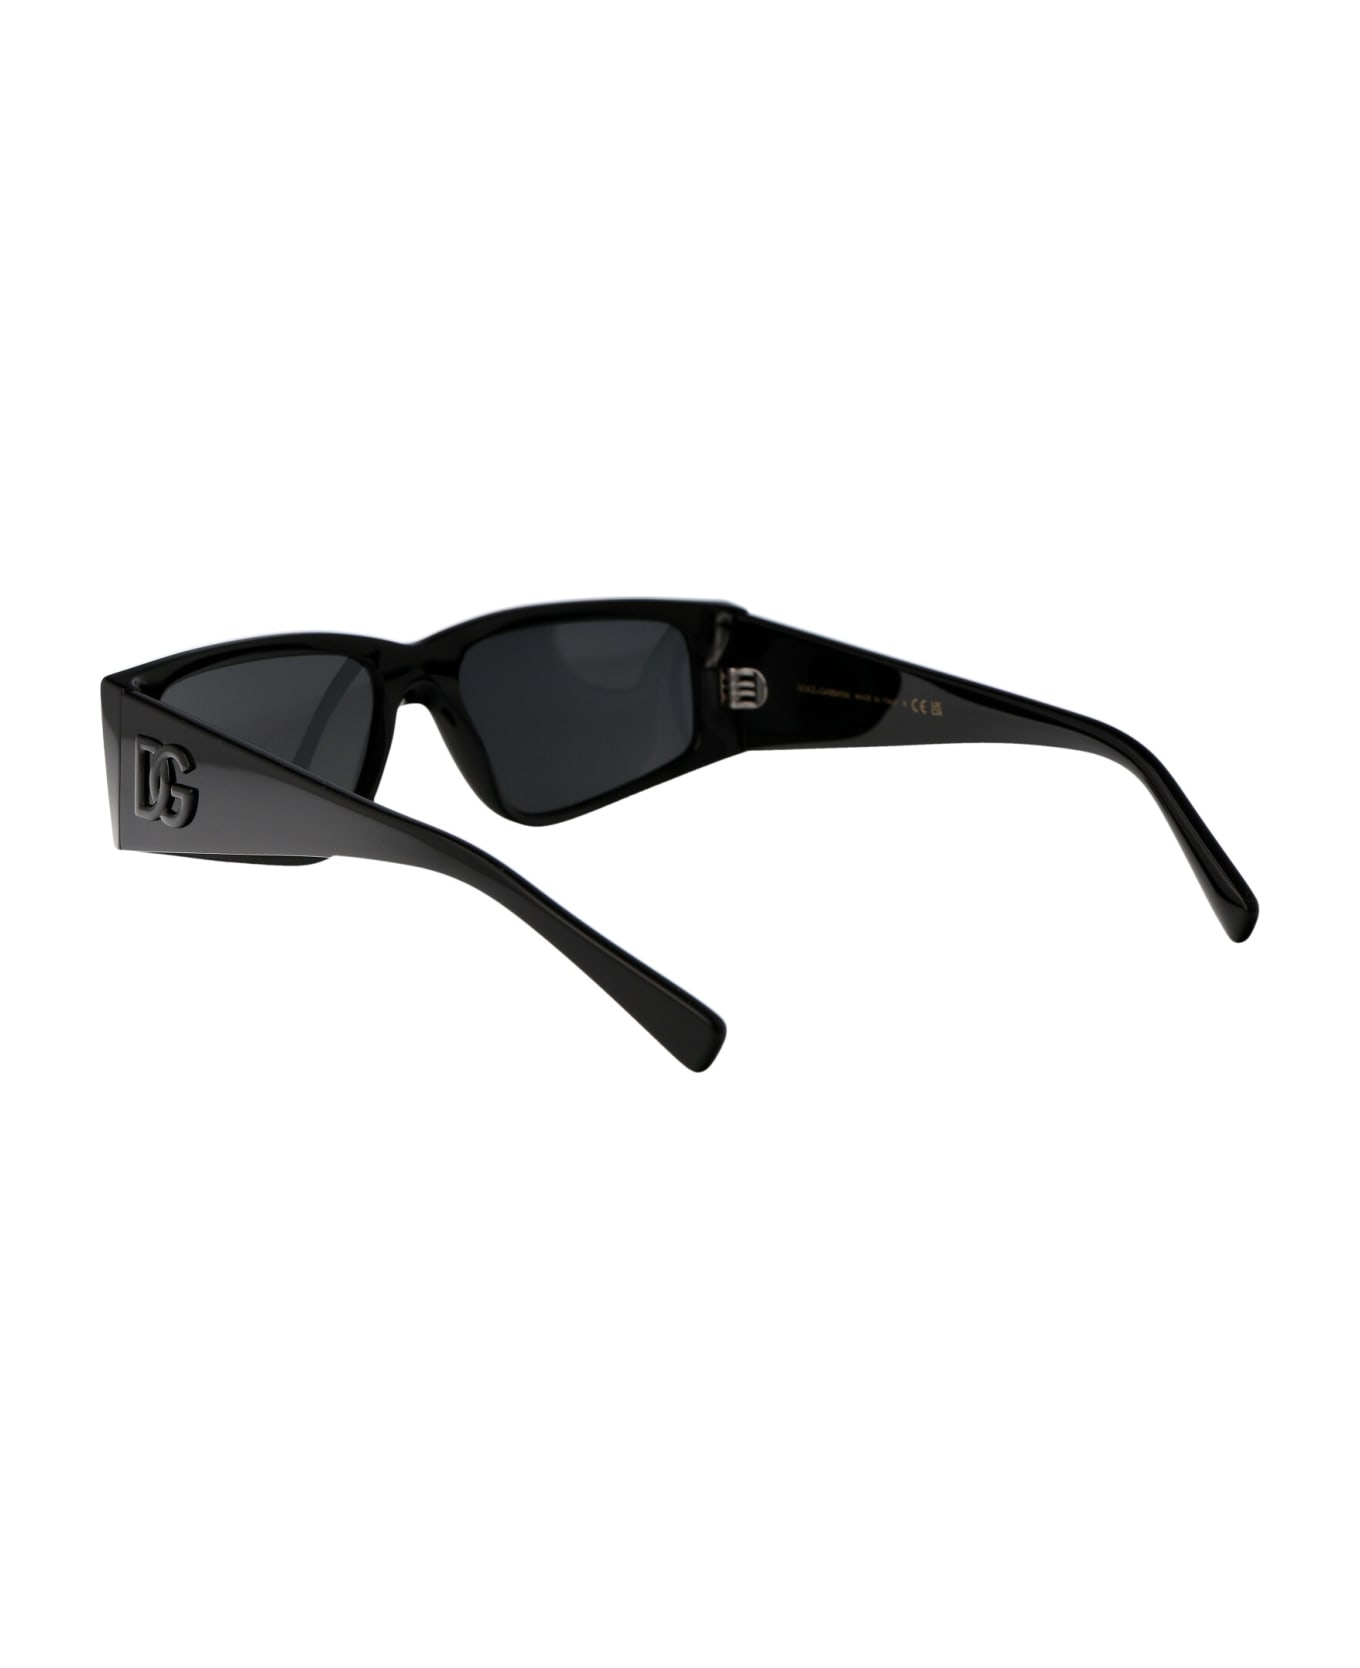 Dolce & Gabbana Eyewear 0dg4453 Sunglasses - 501/87 BLACK